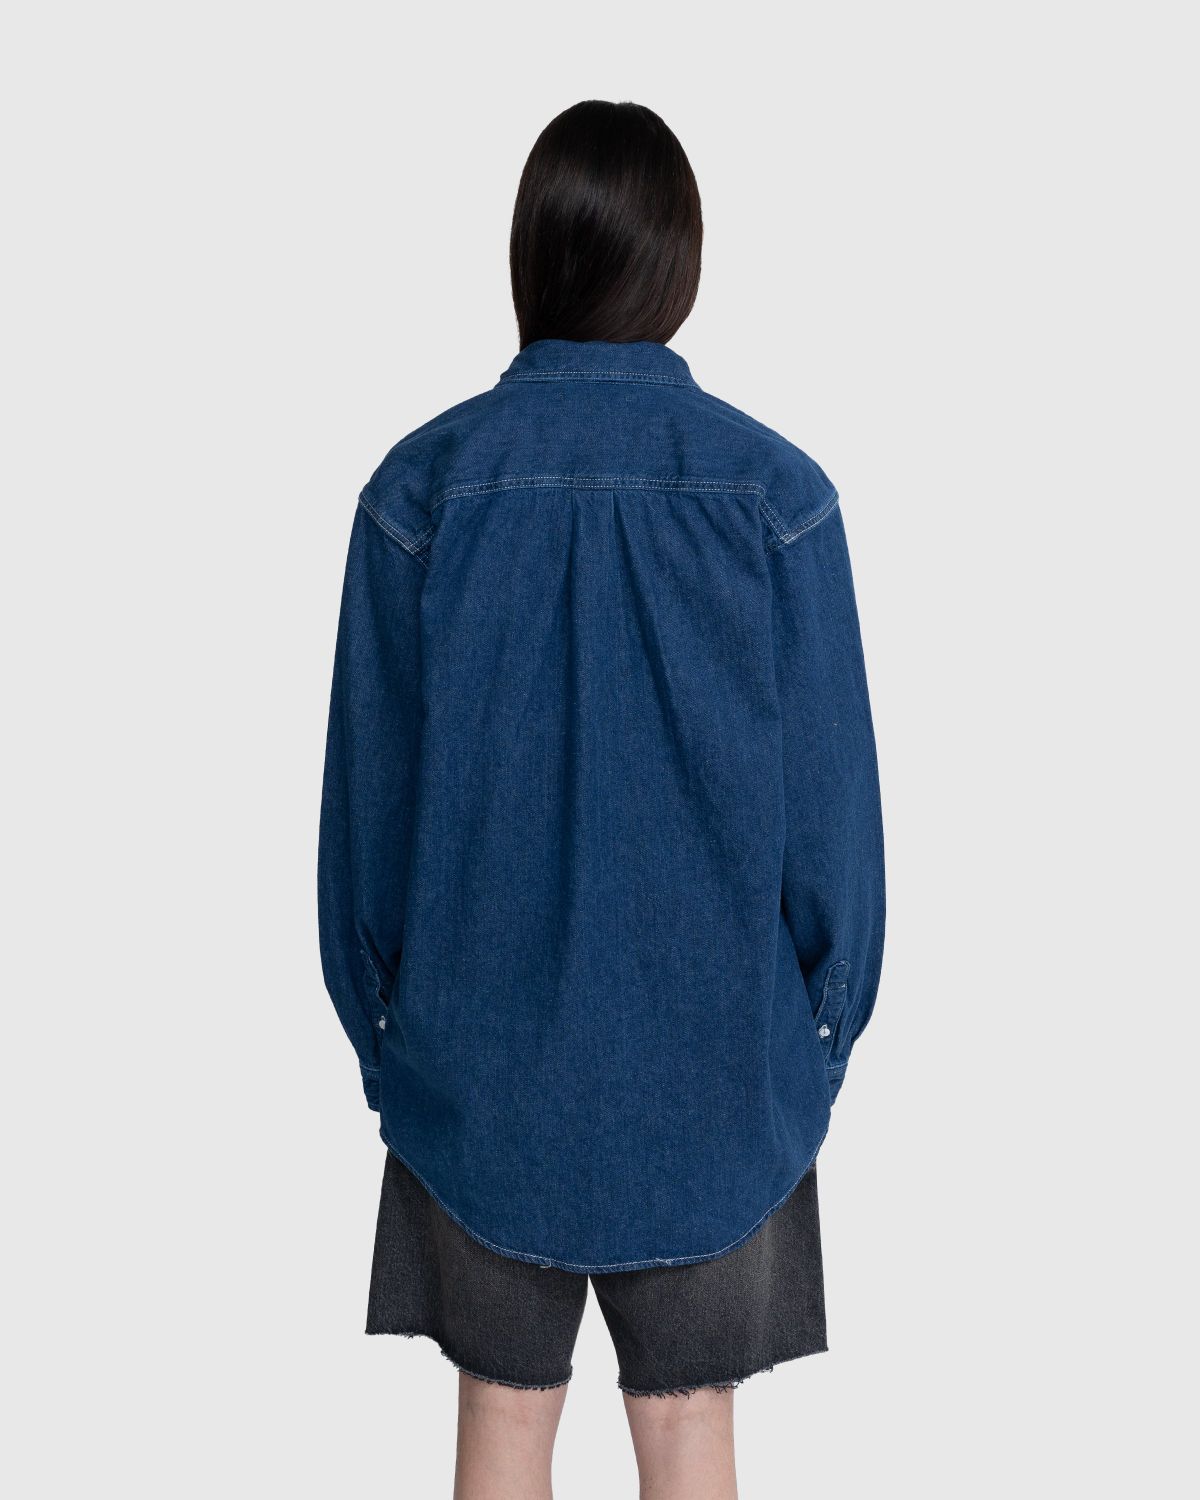 Levi's – LMC Classic Denim Shirt Indigo Rinse Blue | Highsnobiety Shop